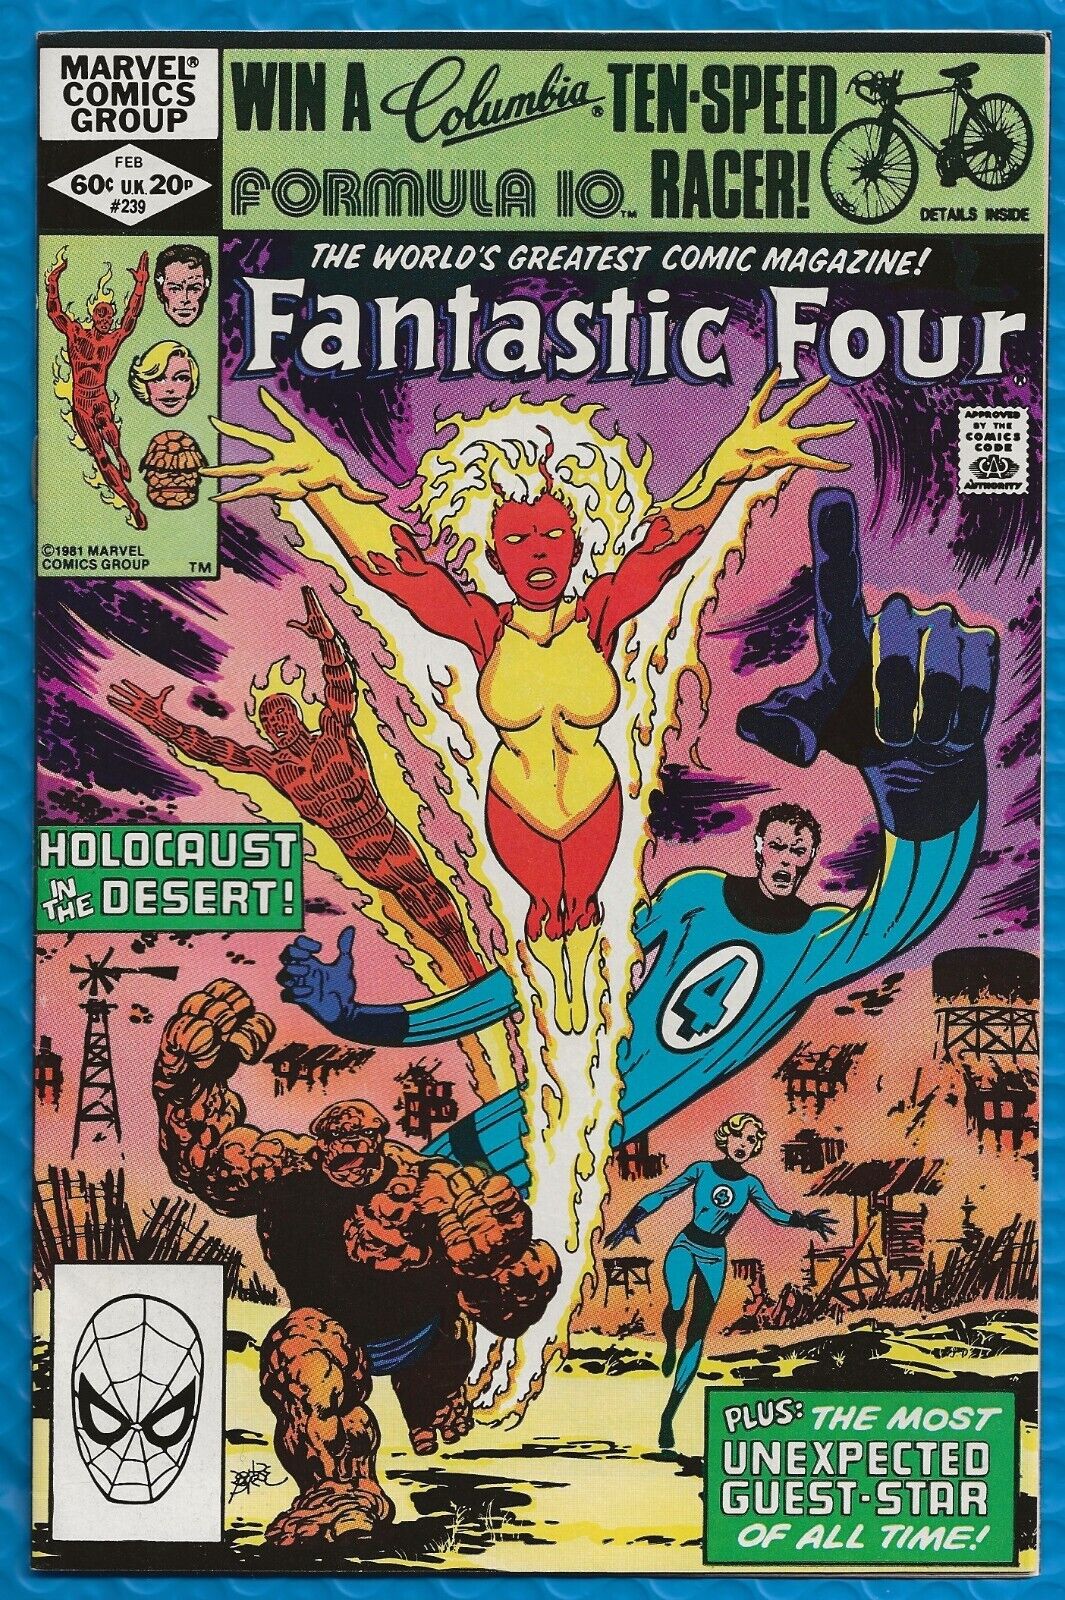 FANTASTIC FOUR #239, "Wendy's Friends" by John Byrne. 1982 Bronze Age Marvel.